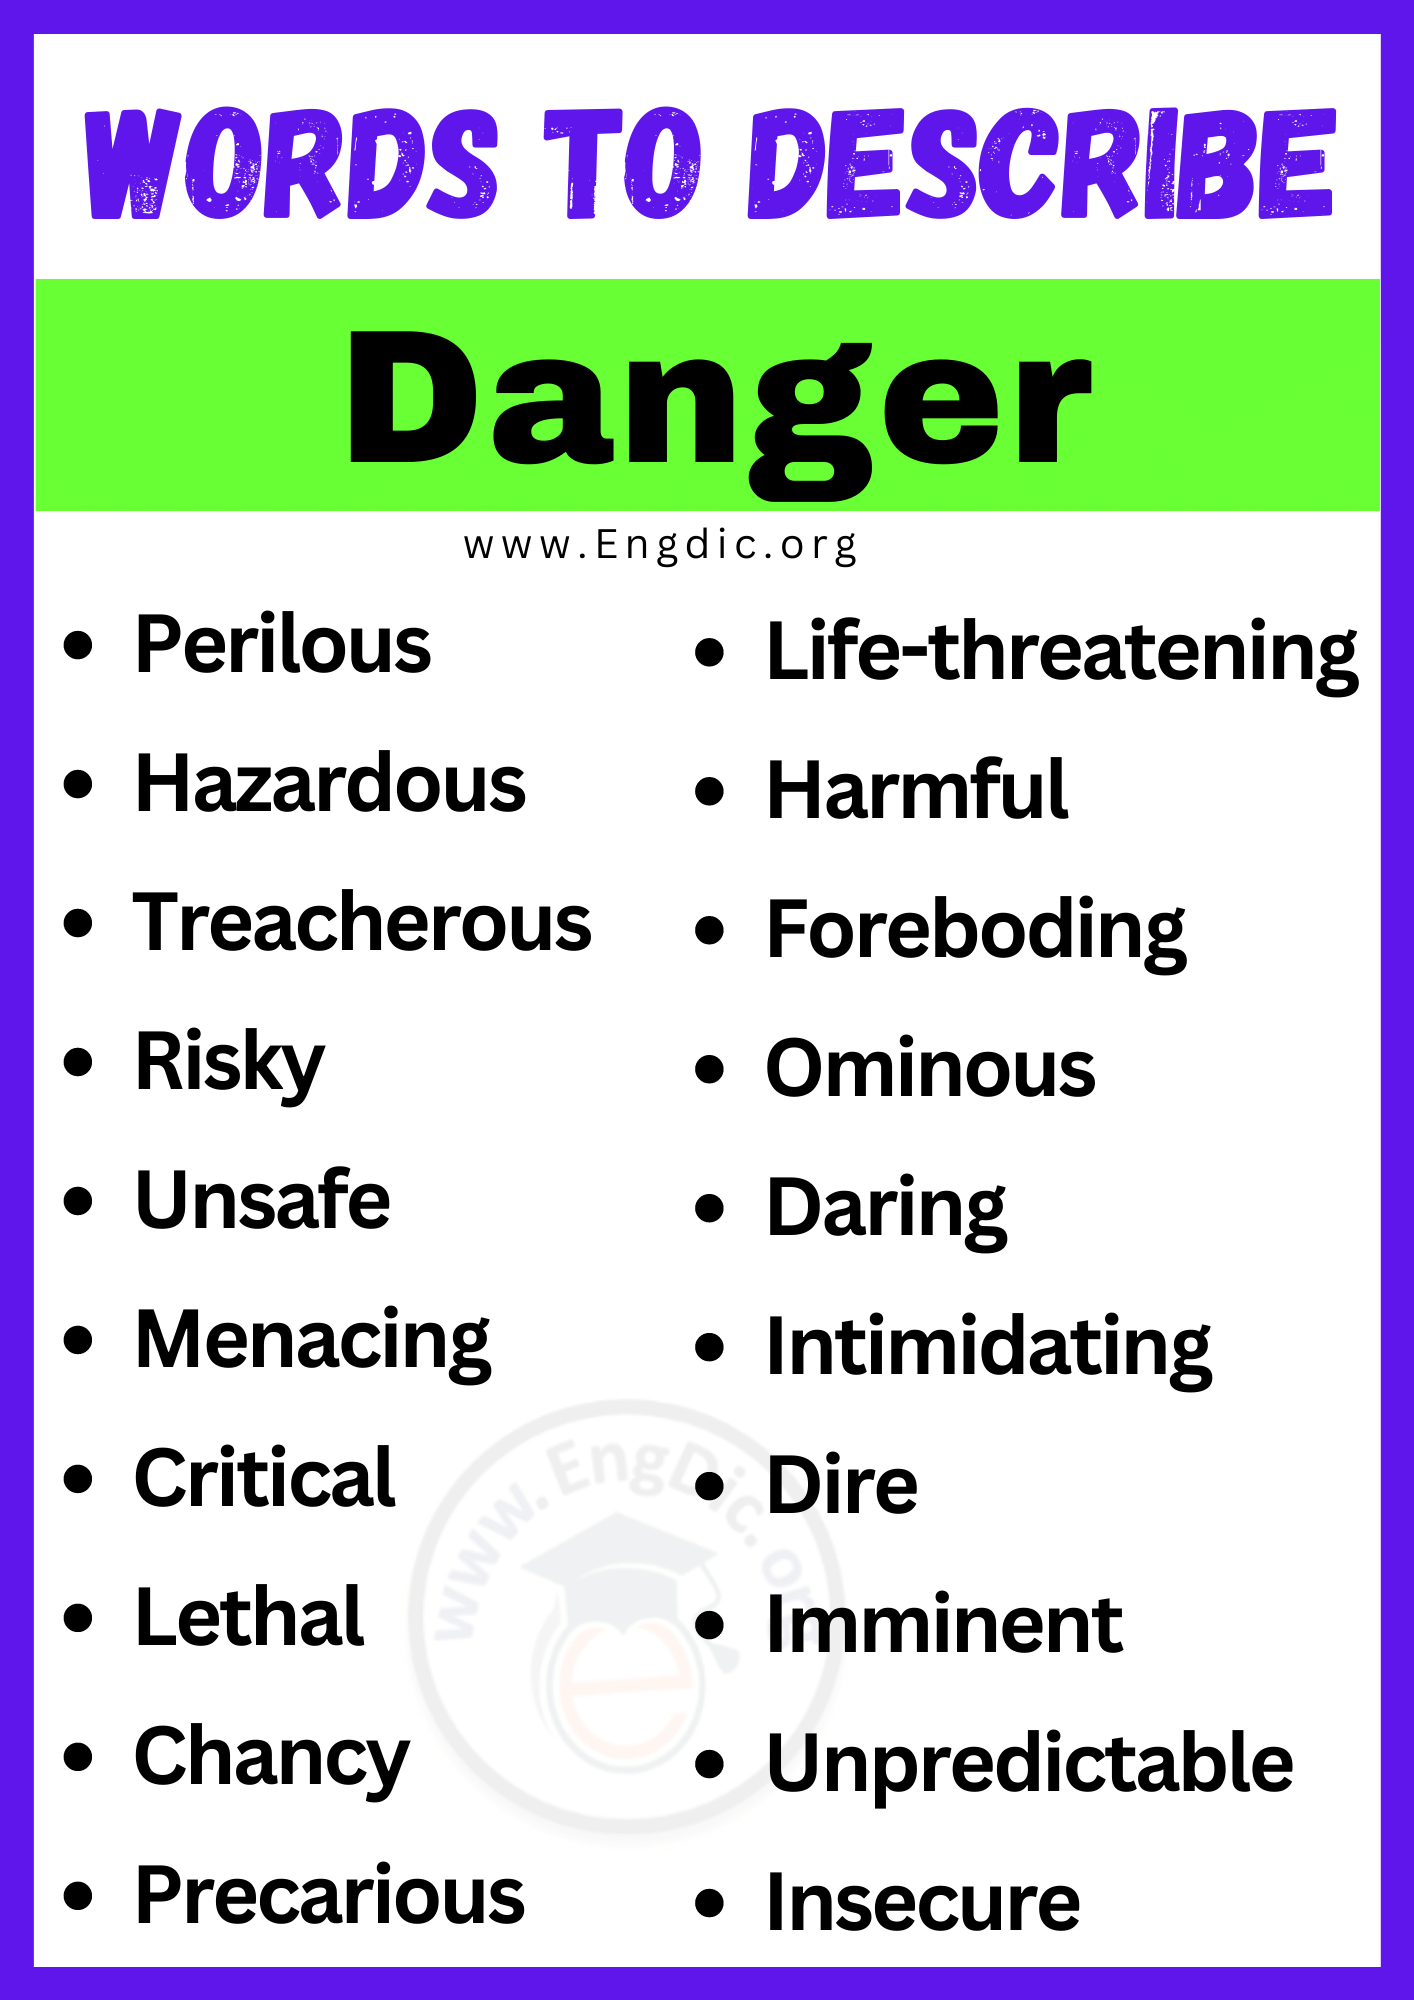 Words to Describe Danger